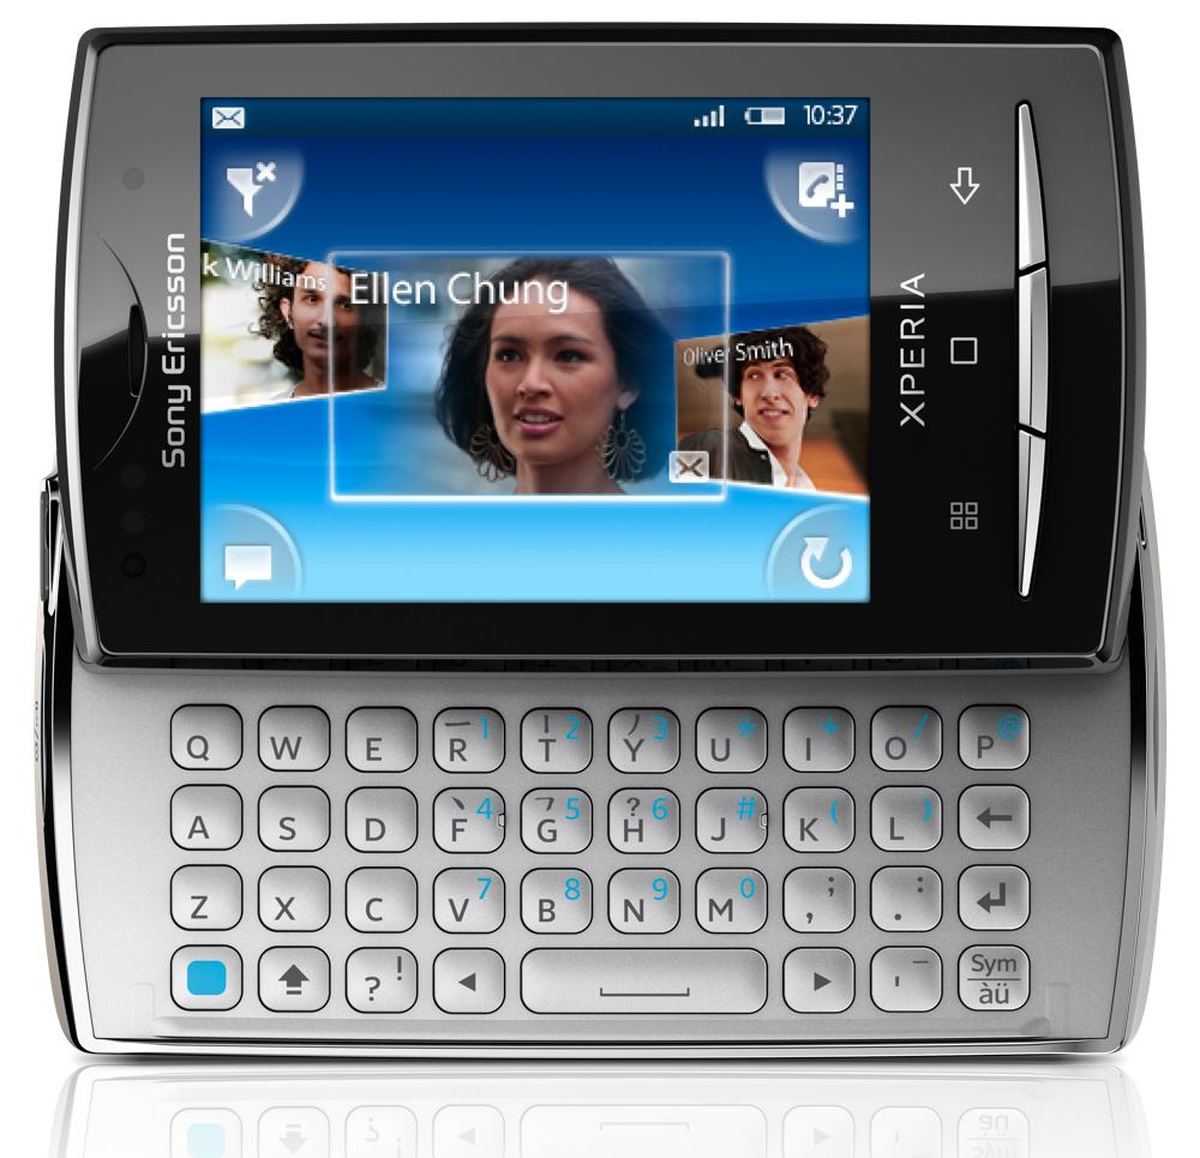 Sony Ericsson Xperia X10 mini pro : Specifications and Opinions | JuzaPhoto